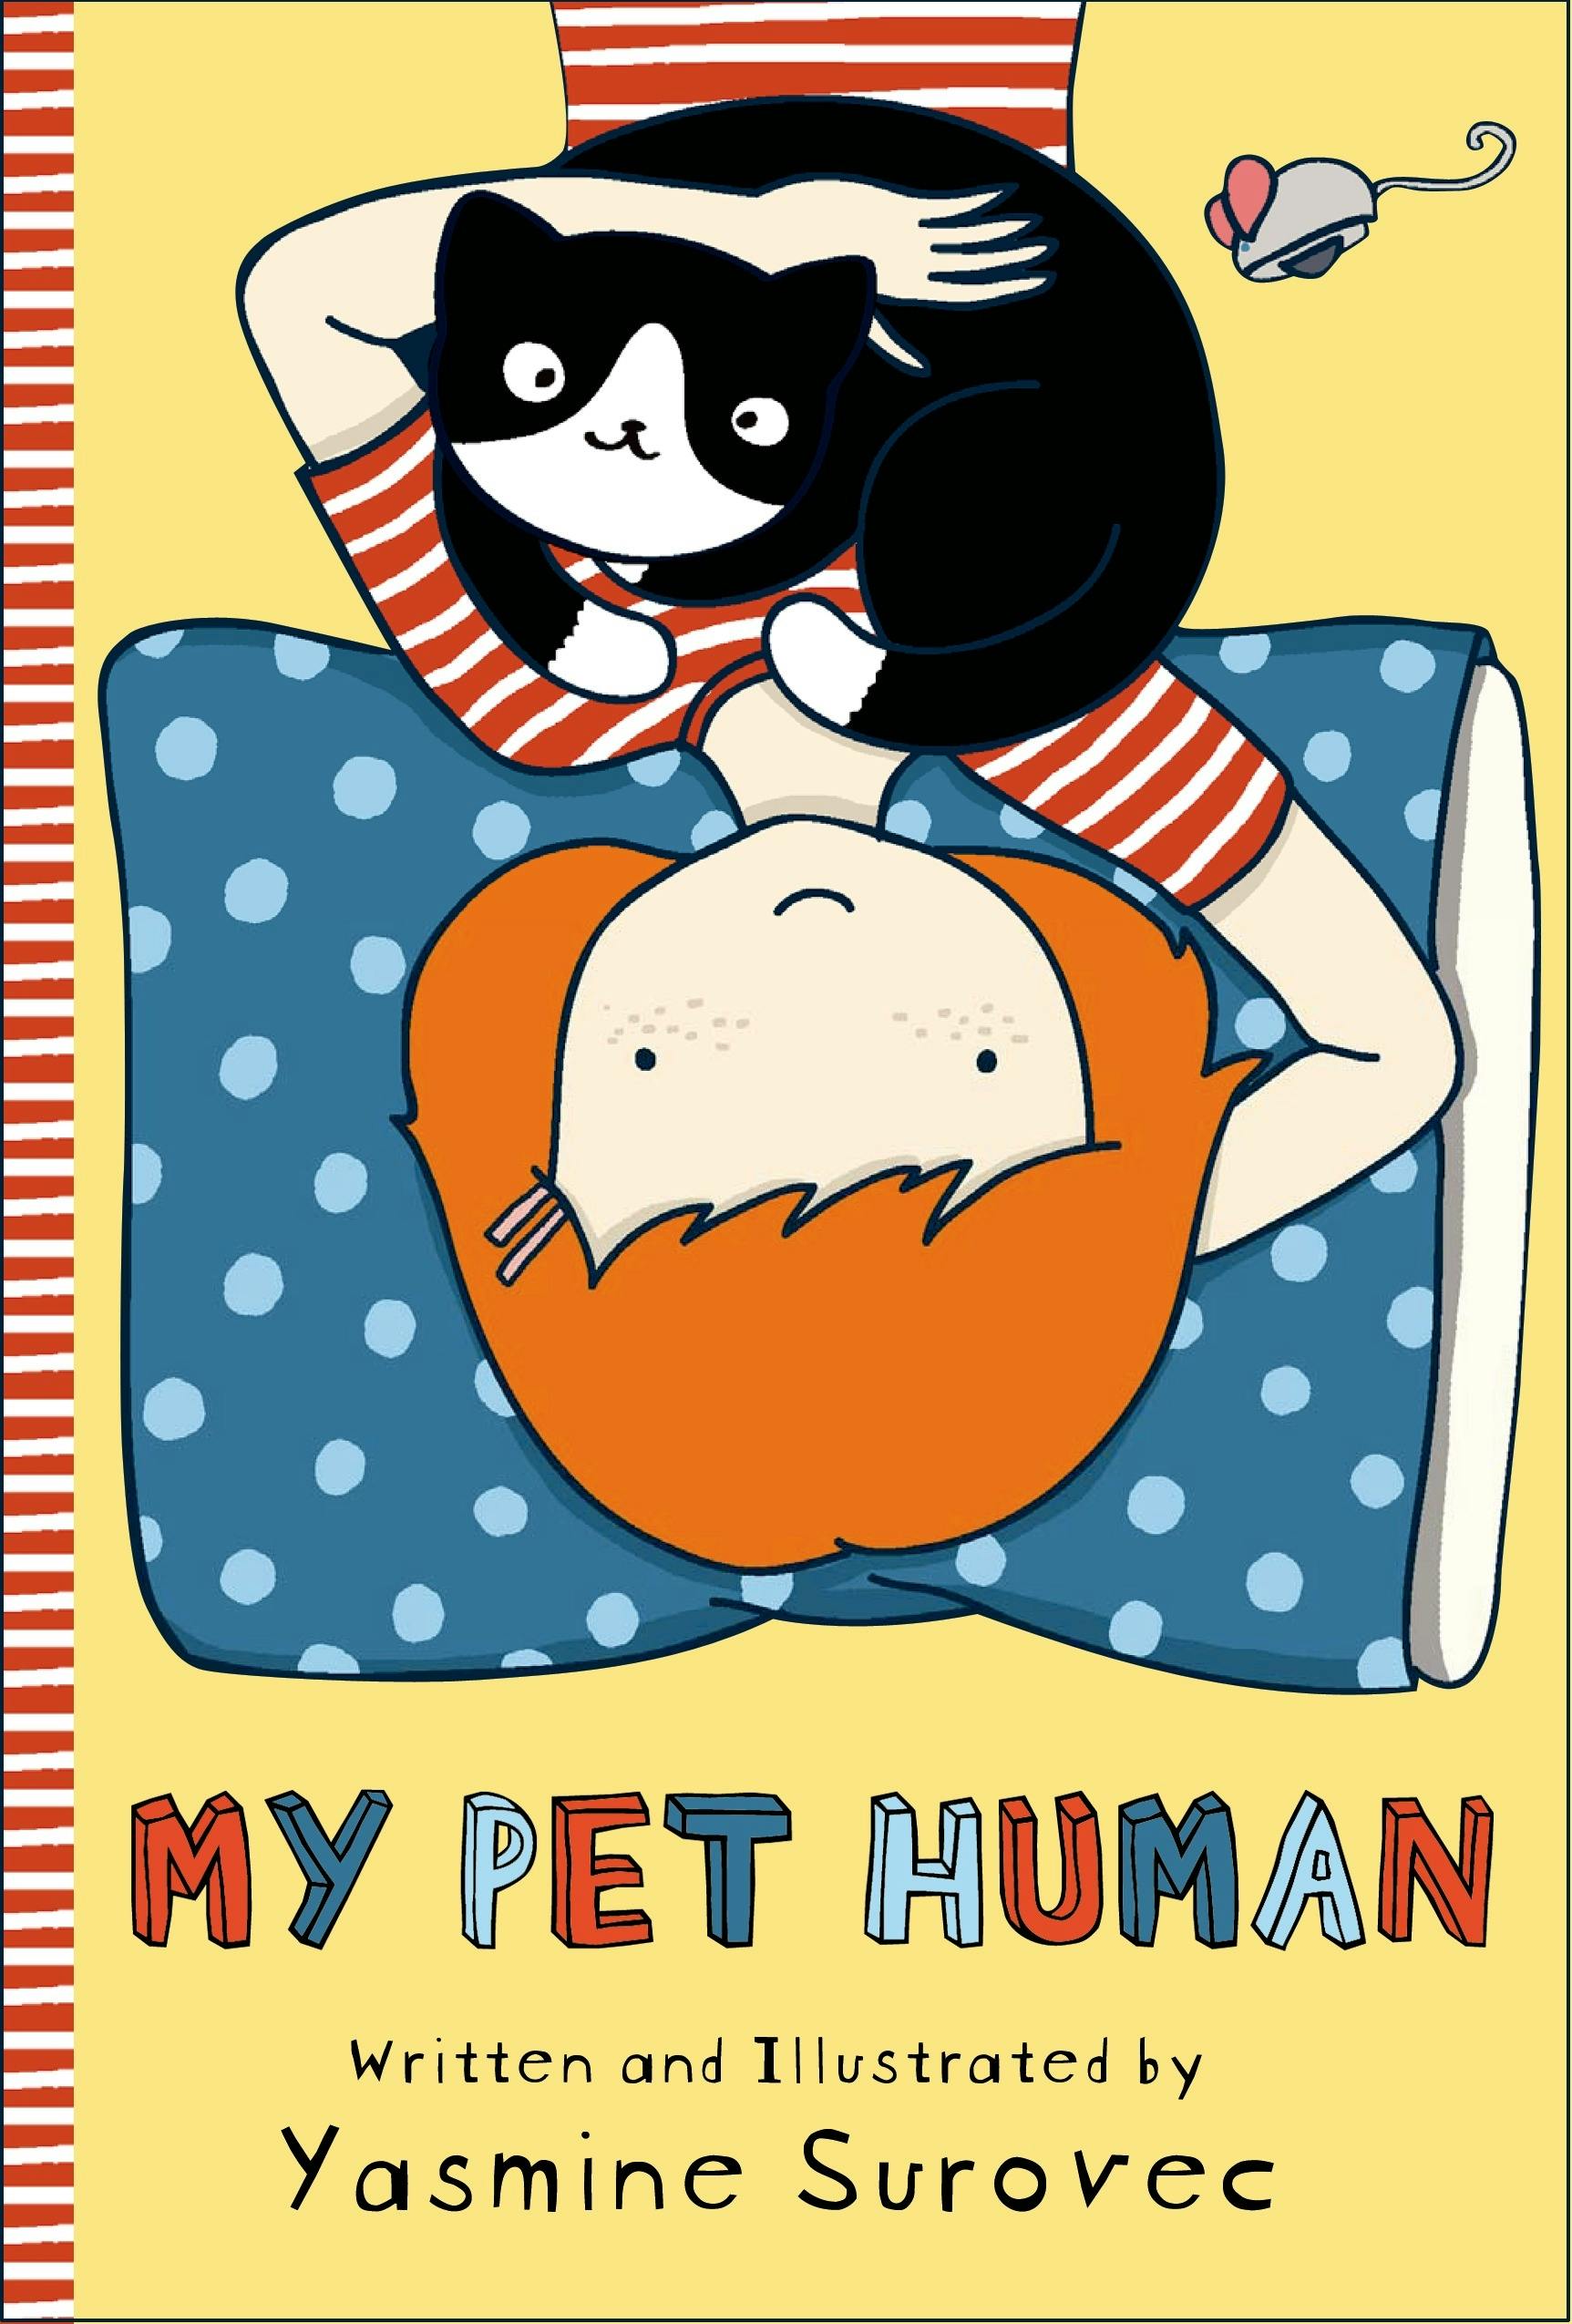 Pet 5 book. Human Pet. My Pet. Carlos g my Pet. Обложка на тему my Pet.